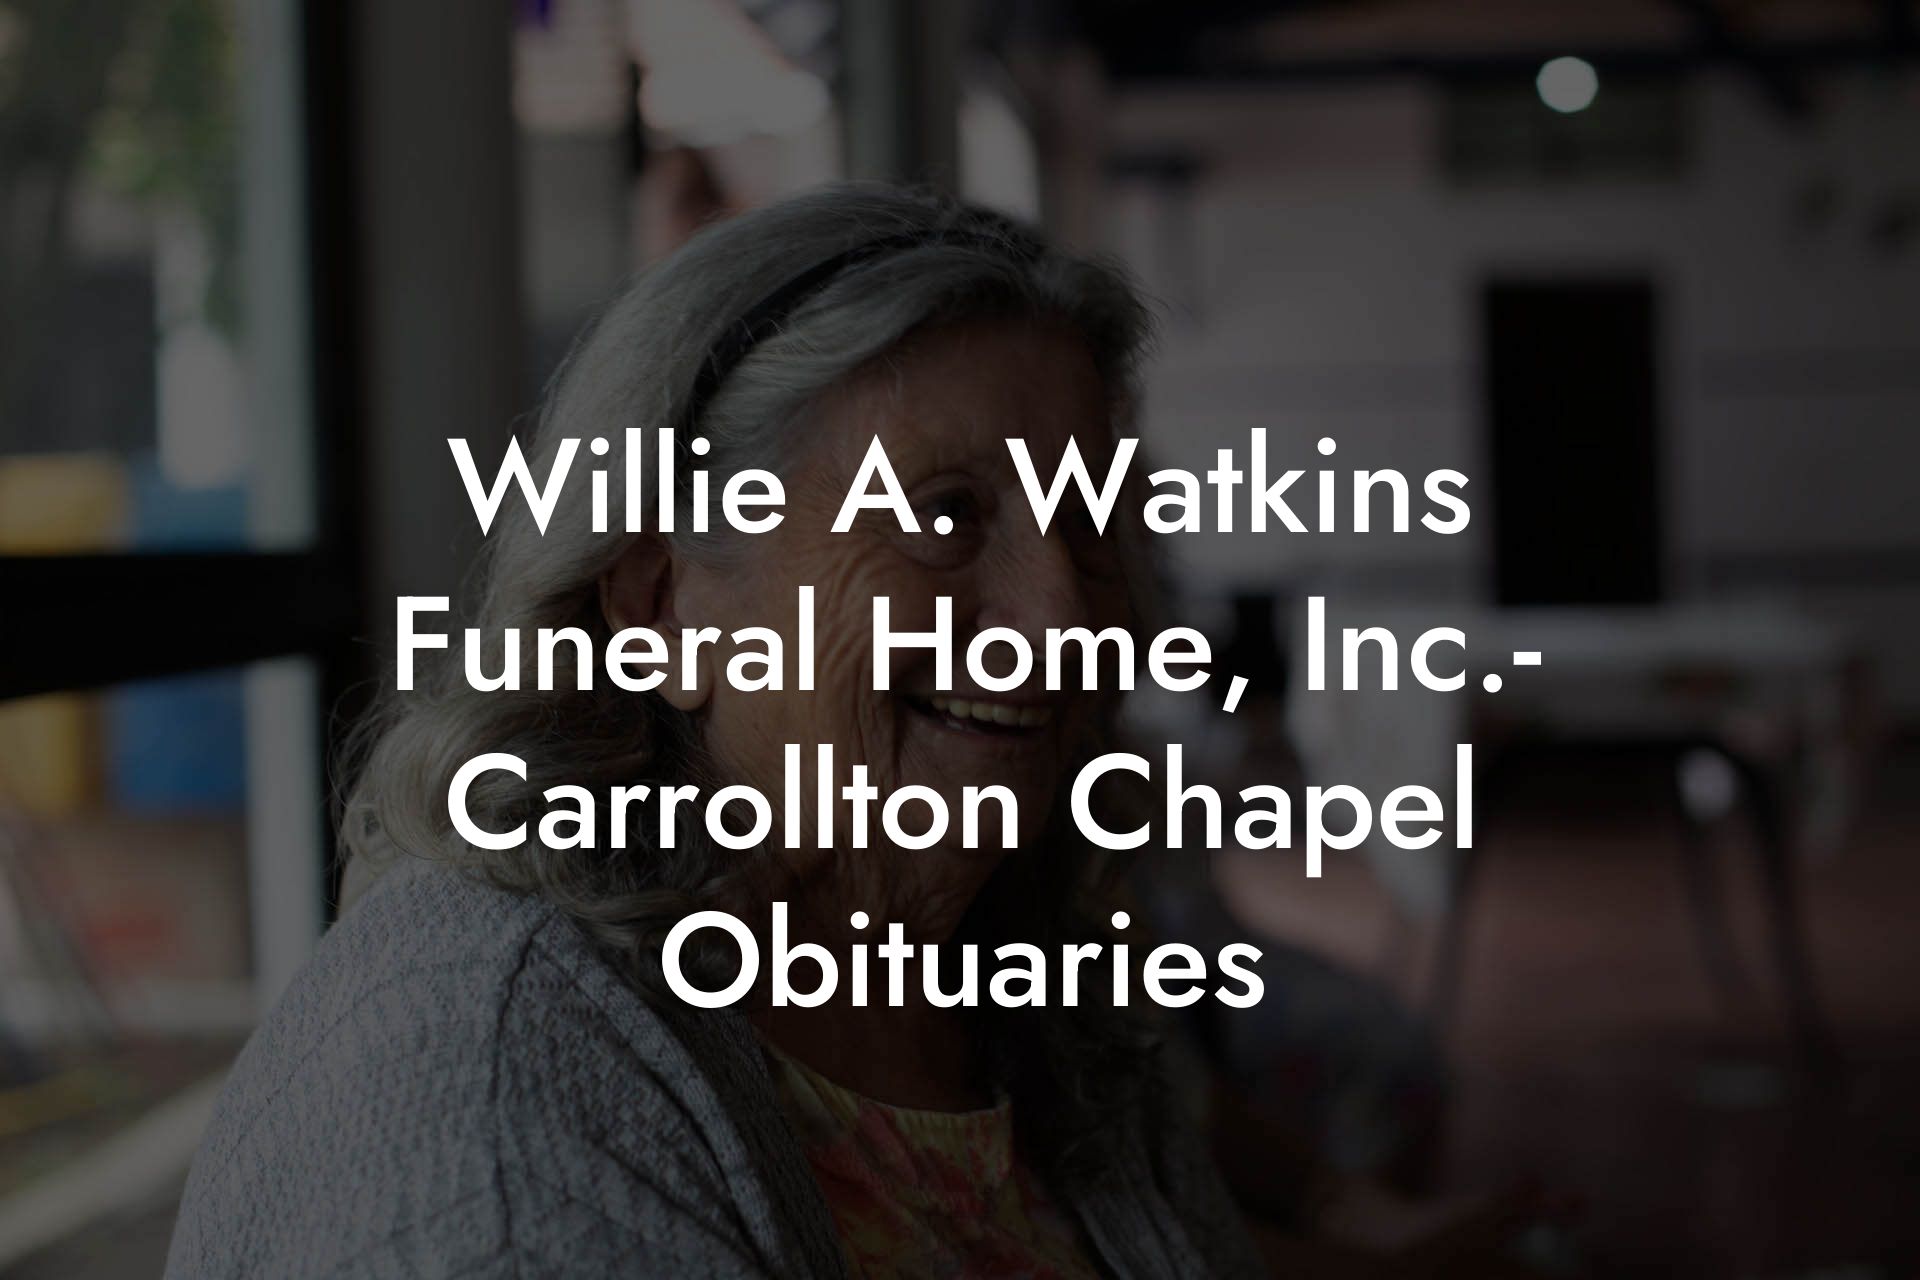 Willie A. Watkins Funeral Home, Inc.- Carrollton Chapel Obituaries